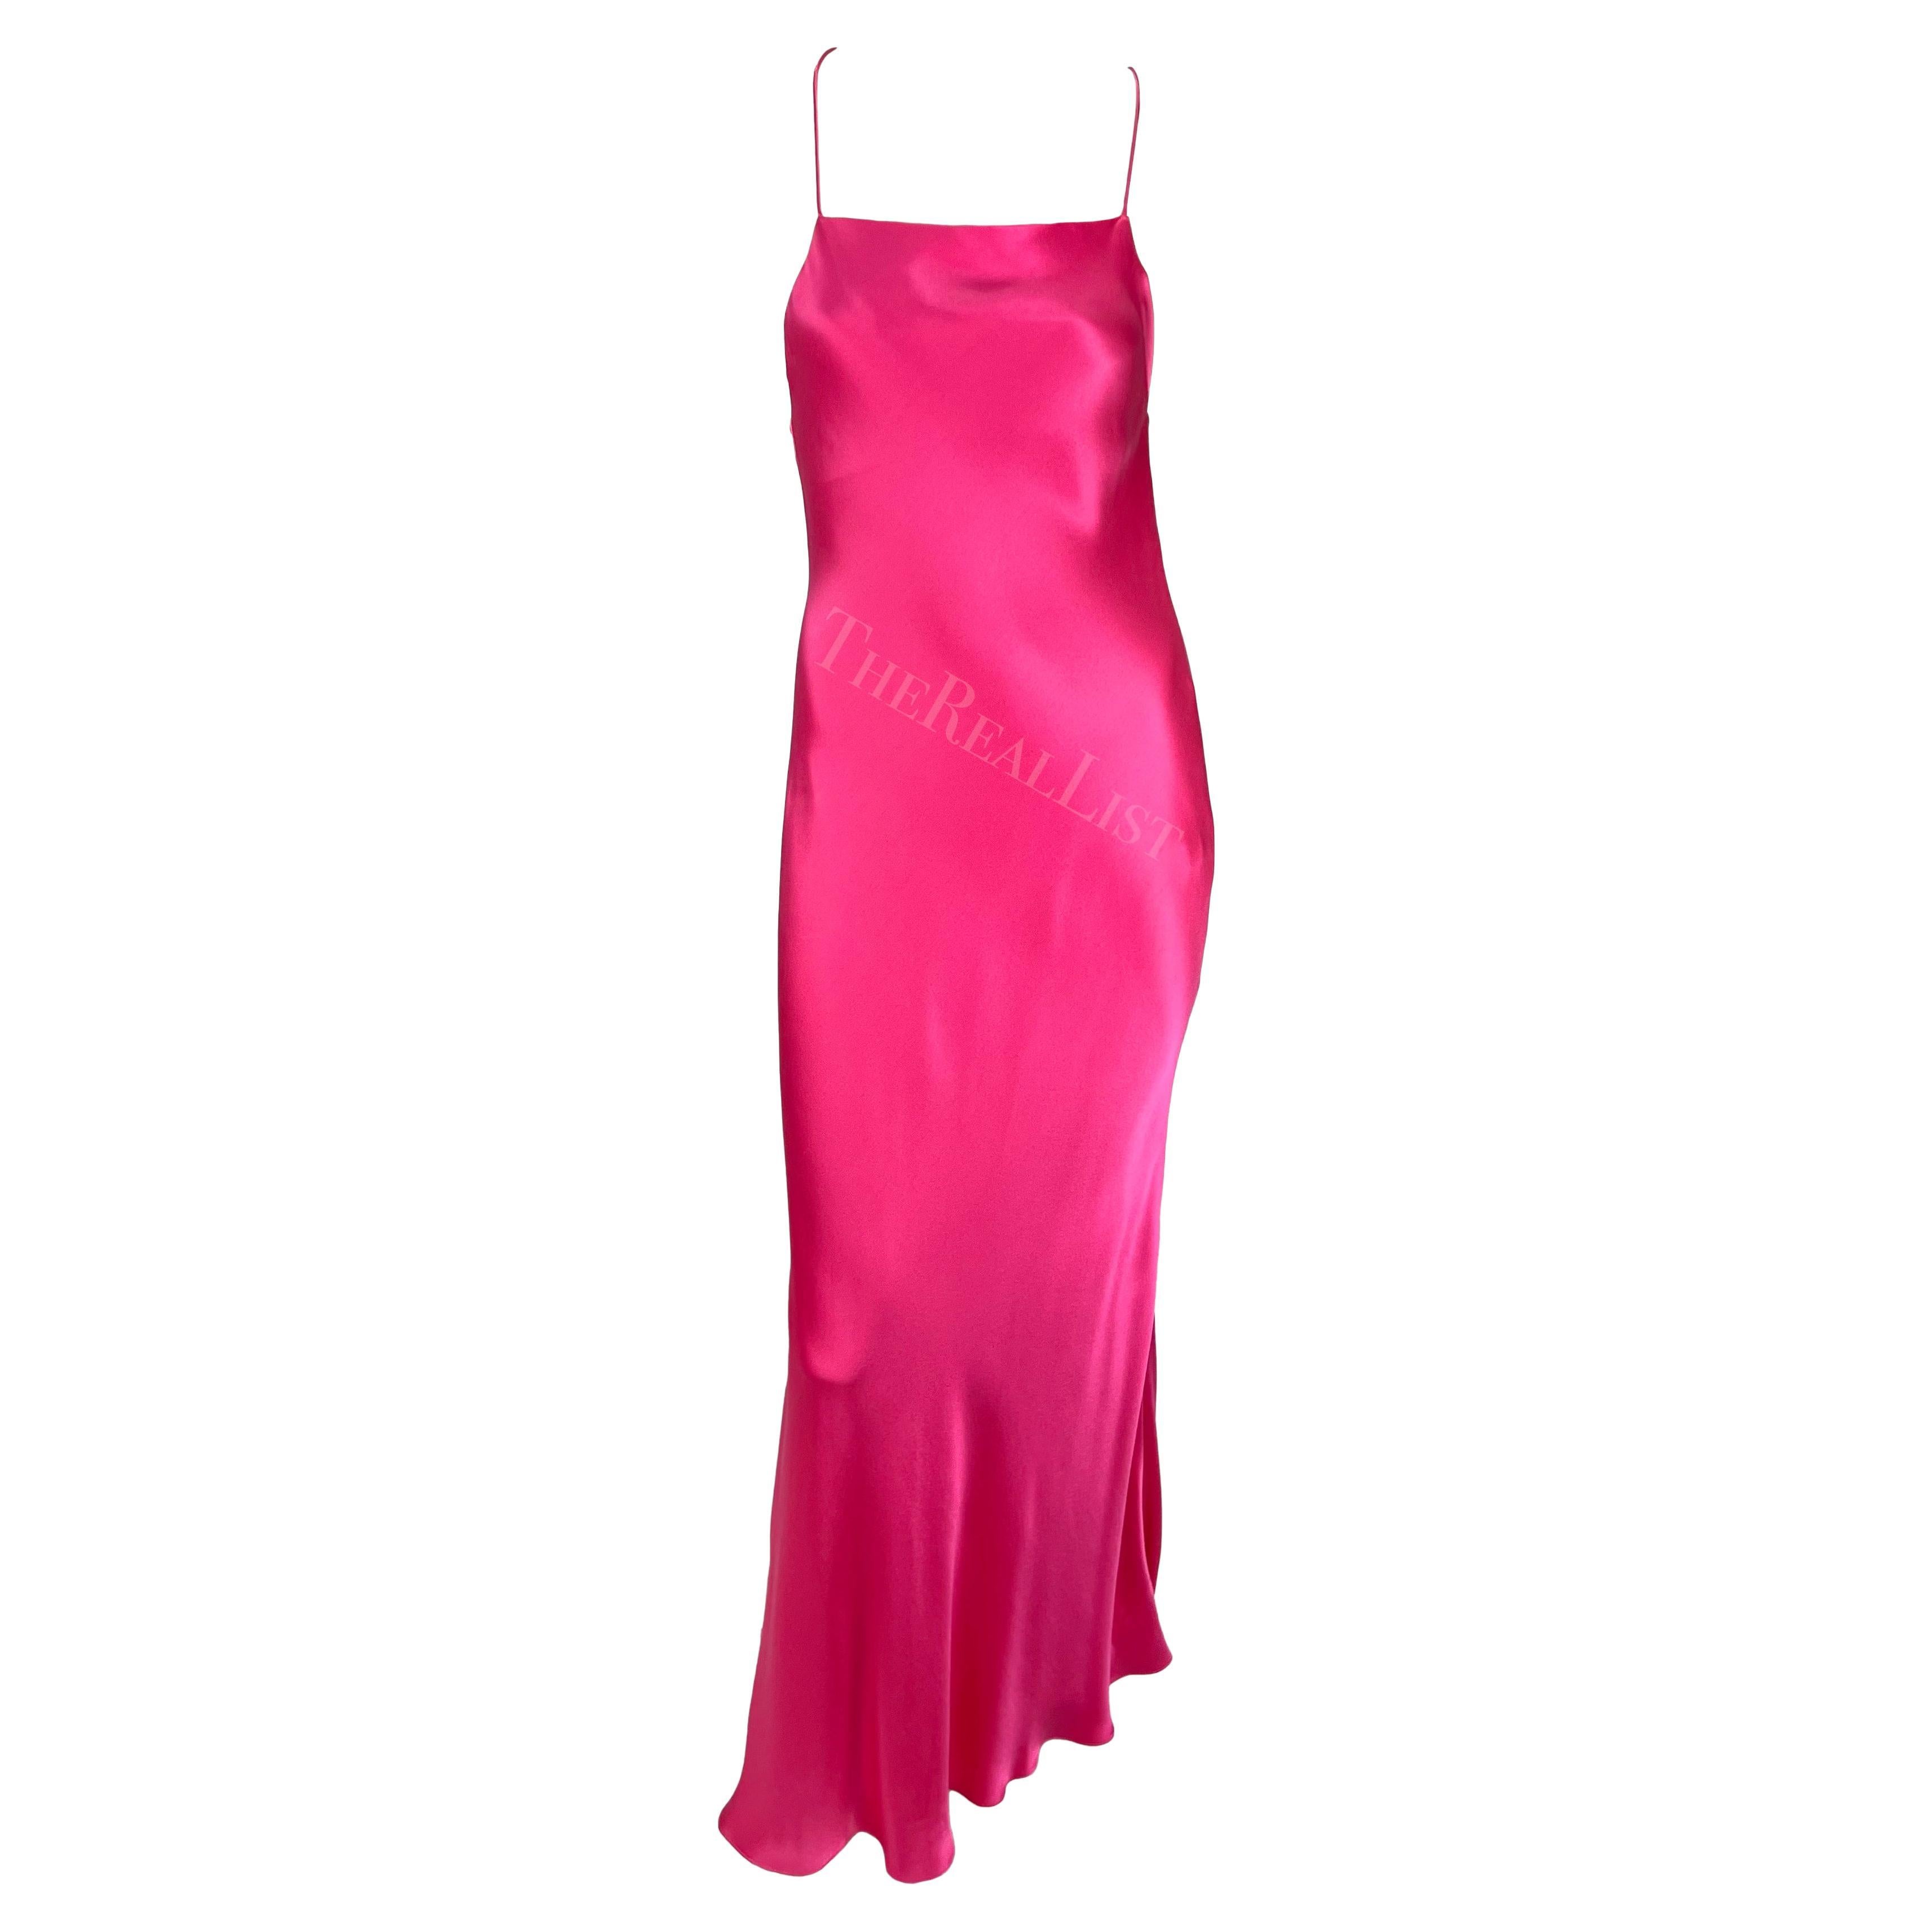 S/S 2004 Ralph Lauren Runway Hot Pink Silk Satin Backless Slip Gown  For Sale 3